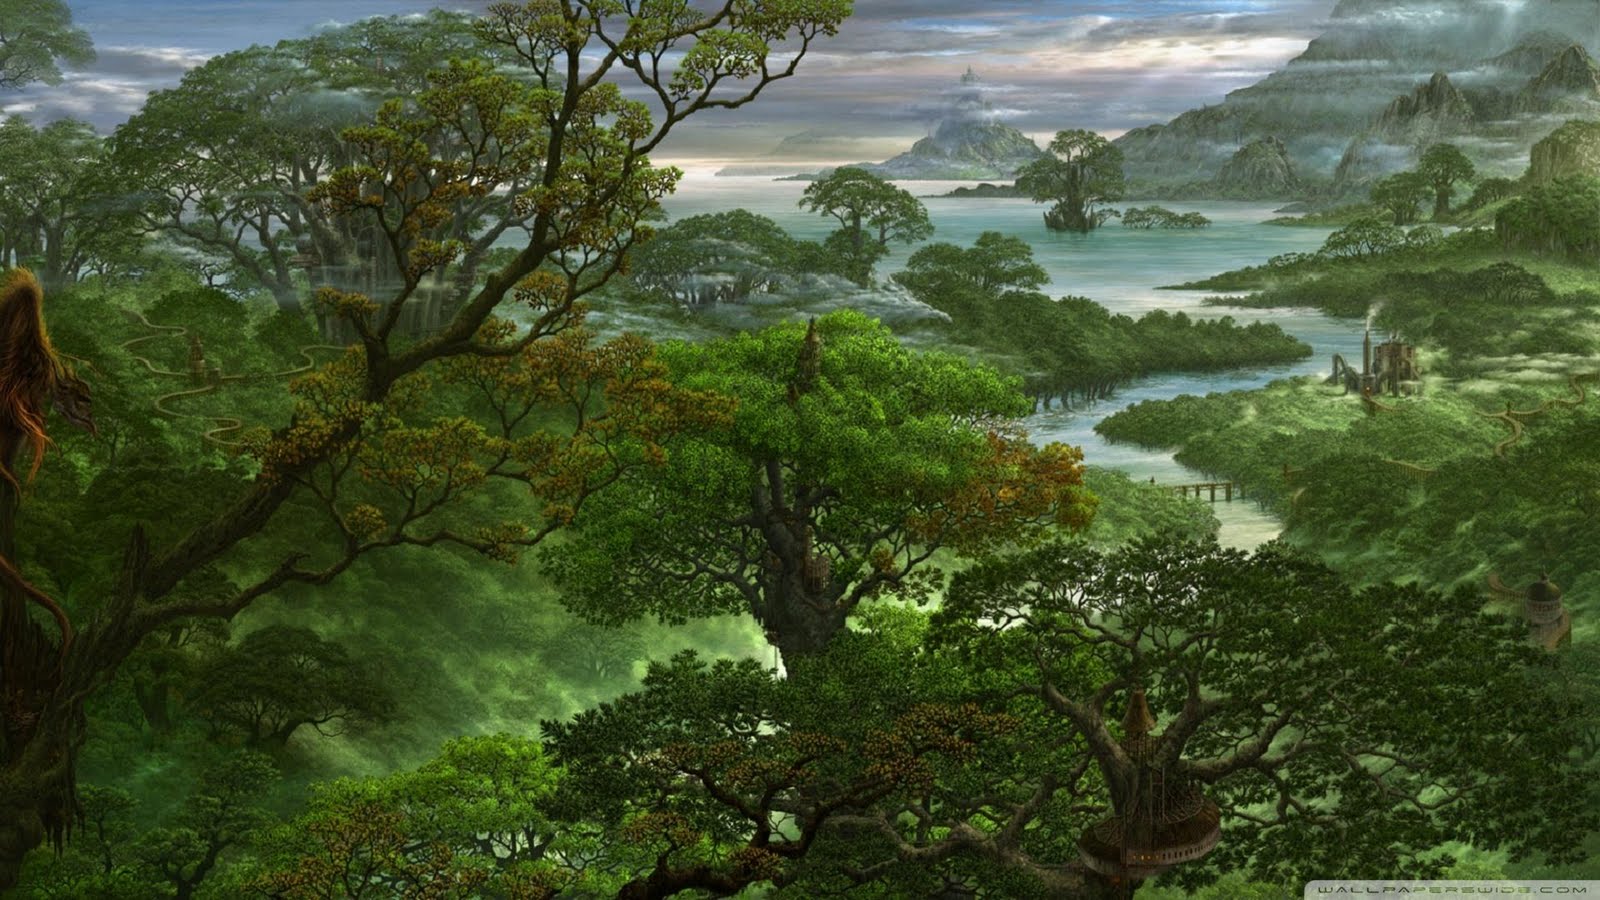 HD Jungle Wallpapers ~ Landscape Wallpapers|HD Wallpapers|Nature Wallpapers